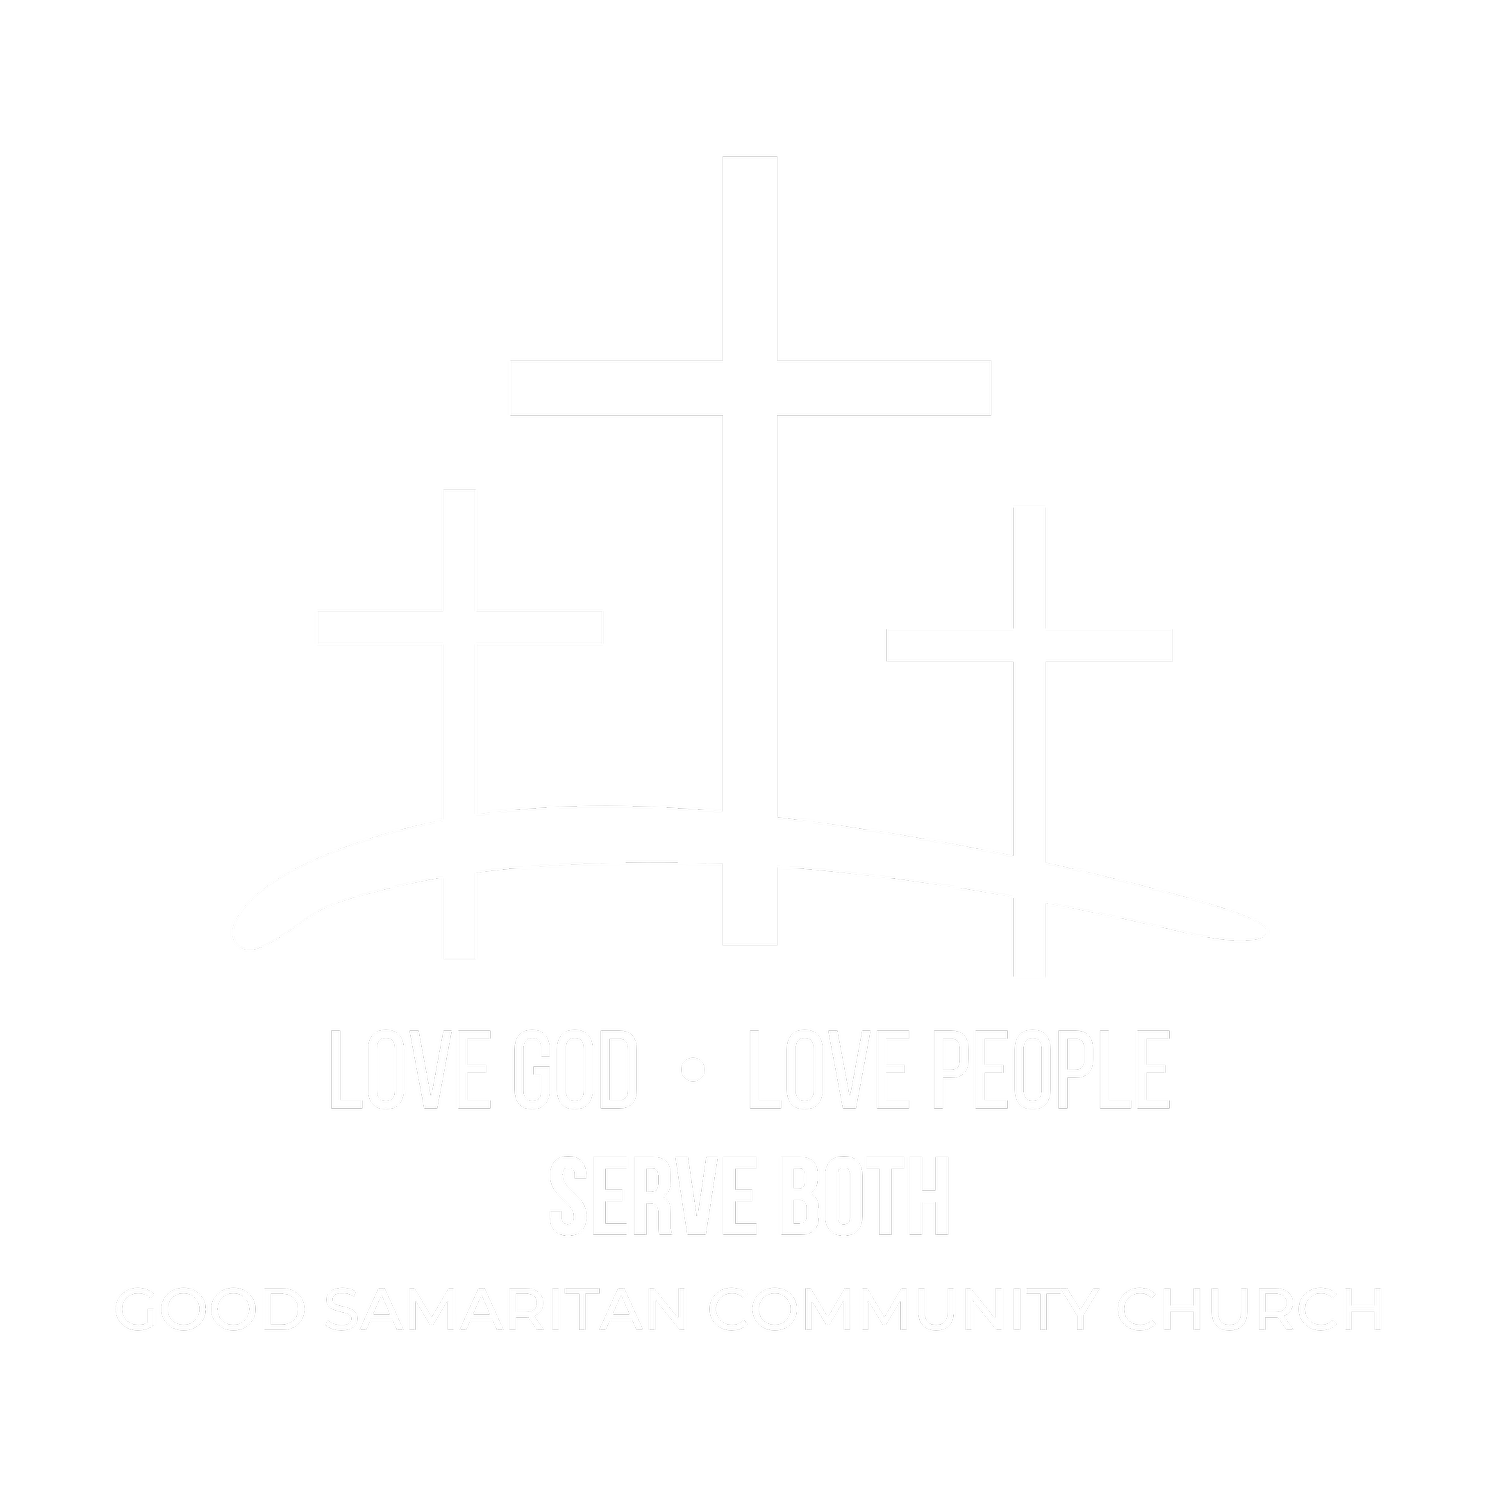 Good Samaritan Community Church